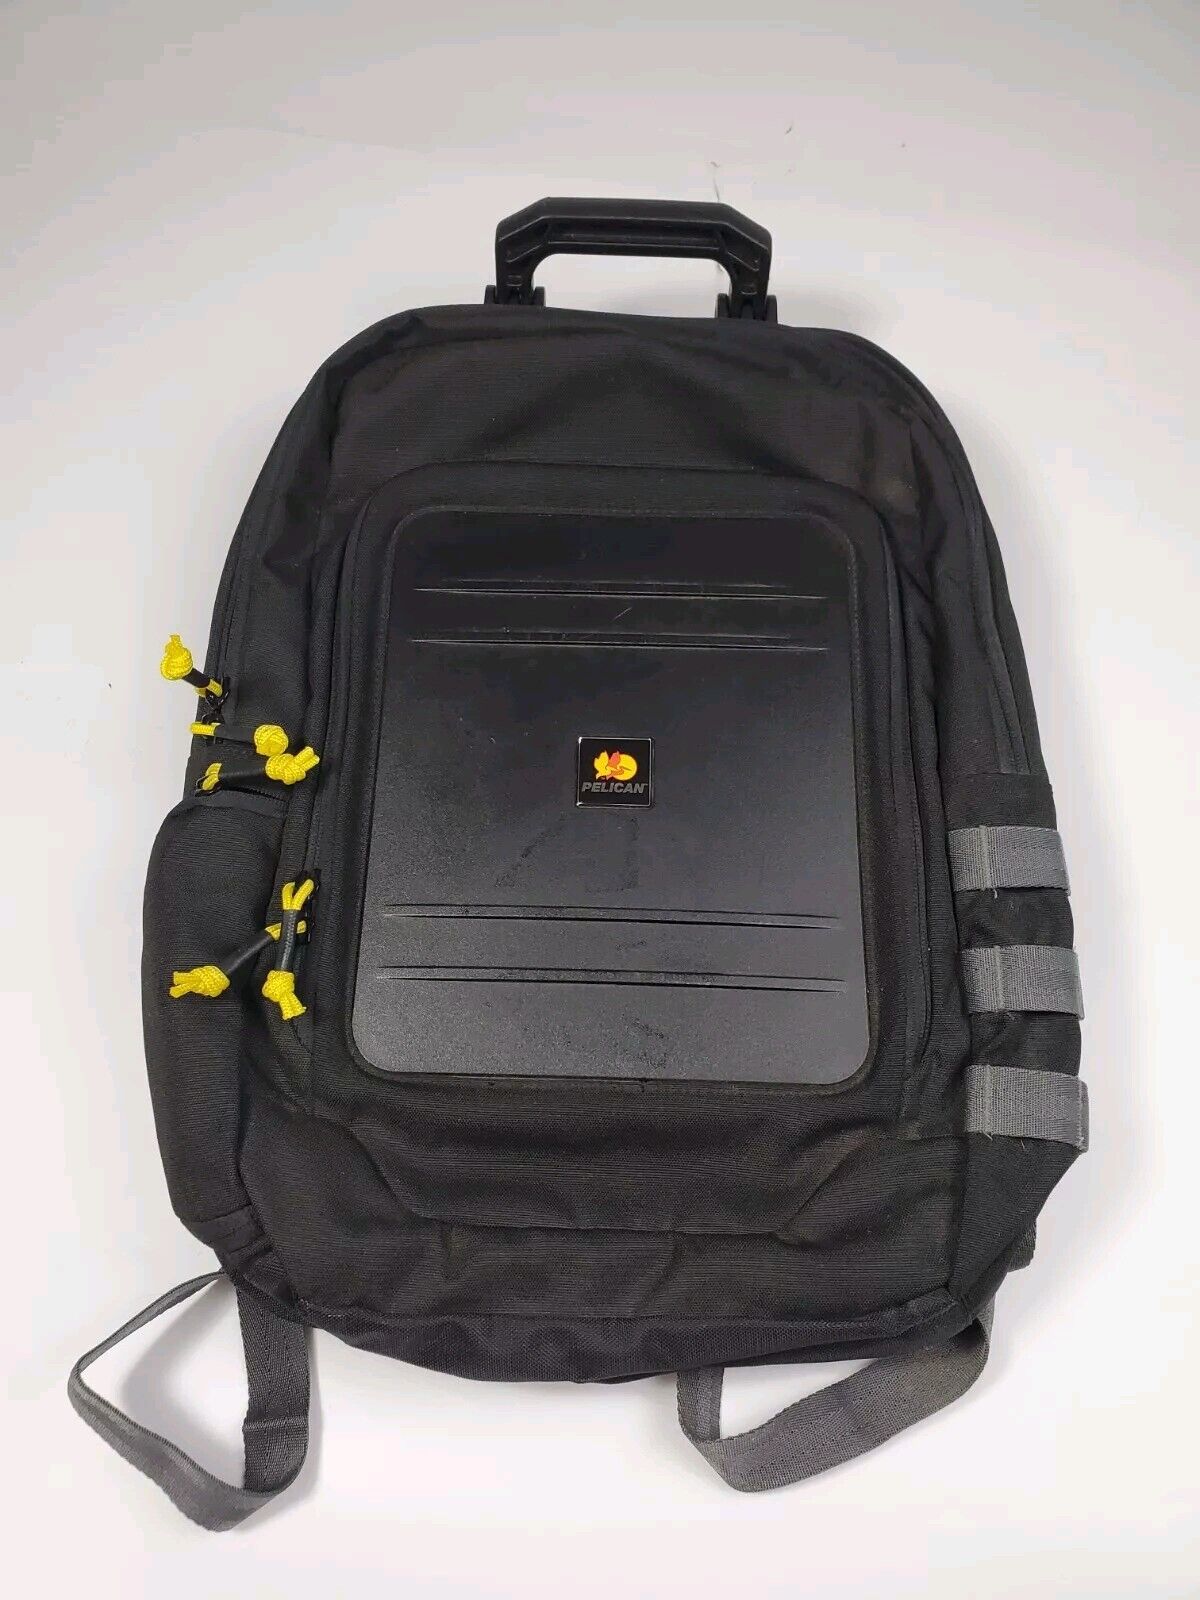 Pelican ProGear U145 Backpack Laptop Travel Lightweight Rugged Tablet Black